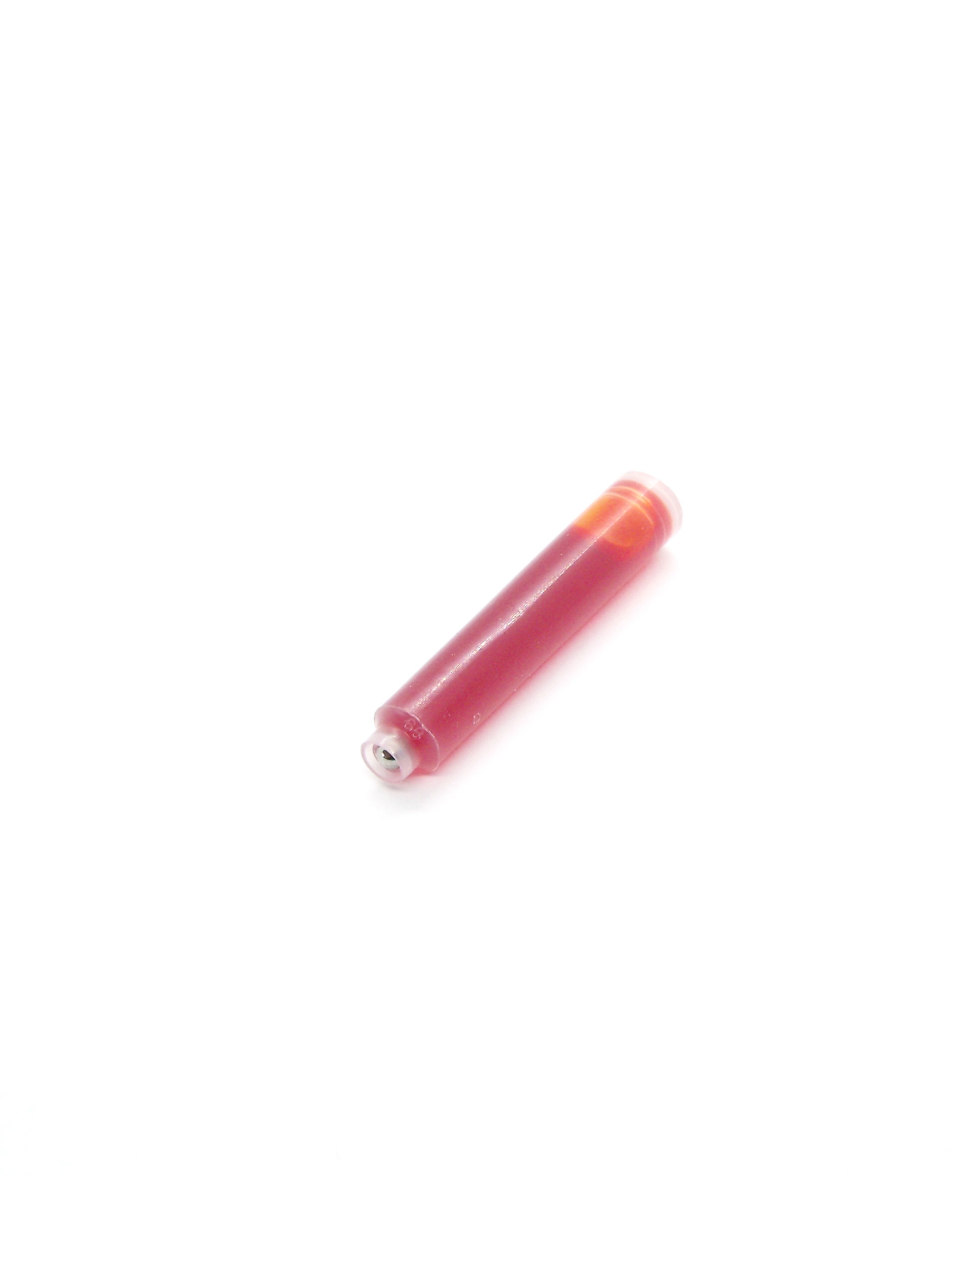 Cartridges For Rosetta Fountain Pens (Orange)